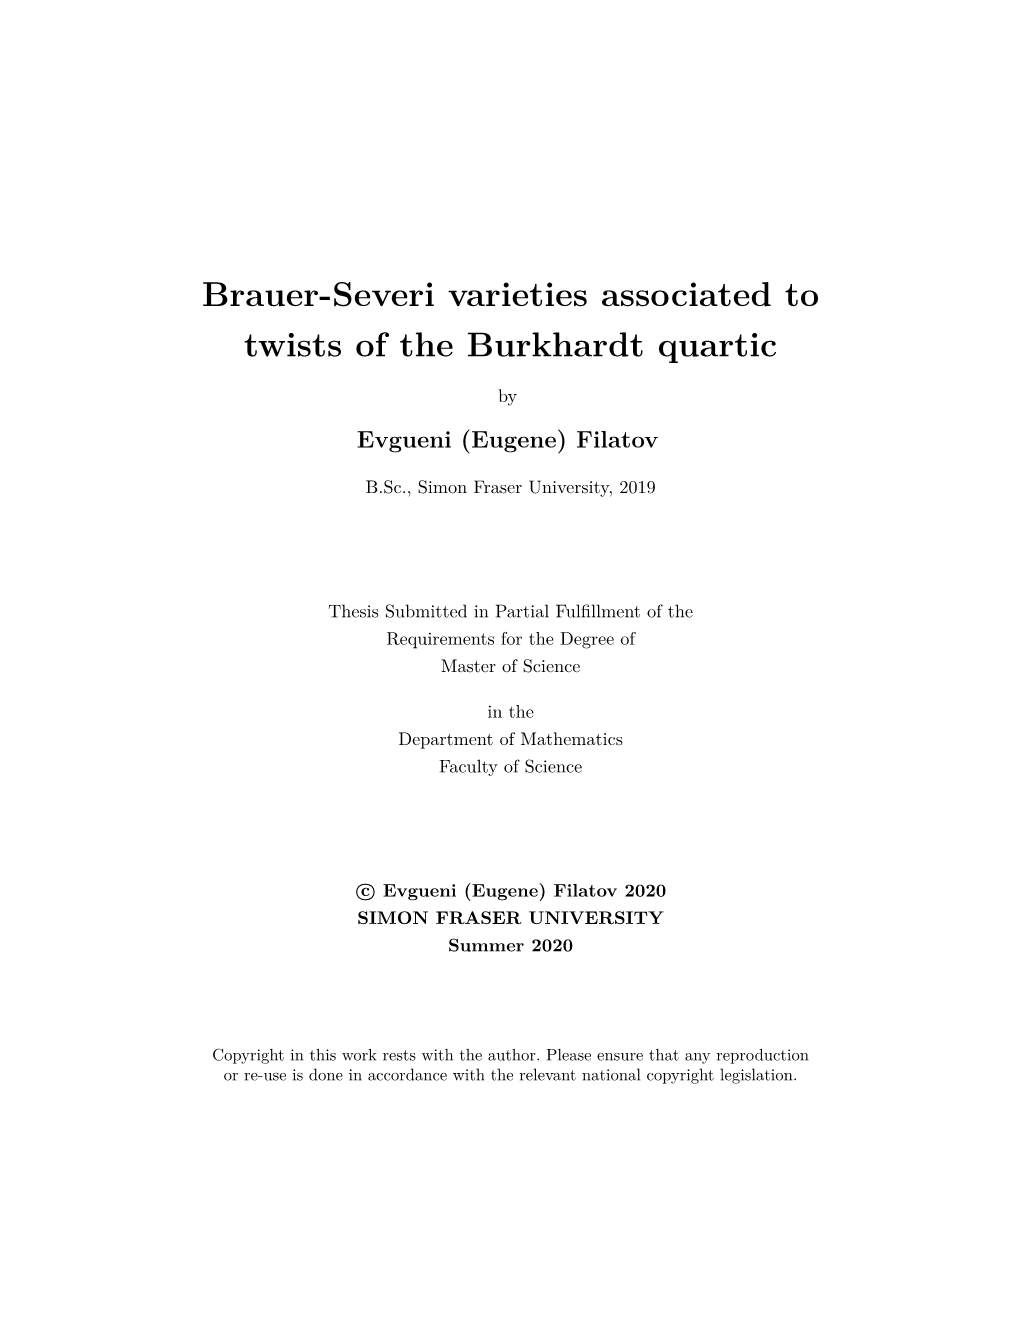 Brauer-Severi Varieties Associated to Twists of the Burkhardt Quartic